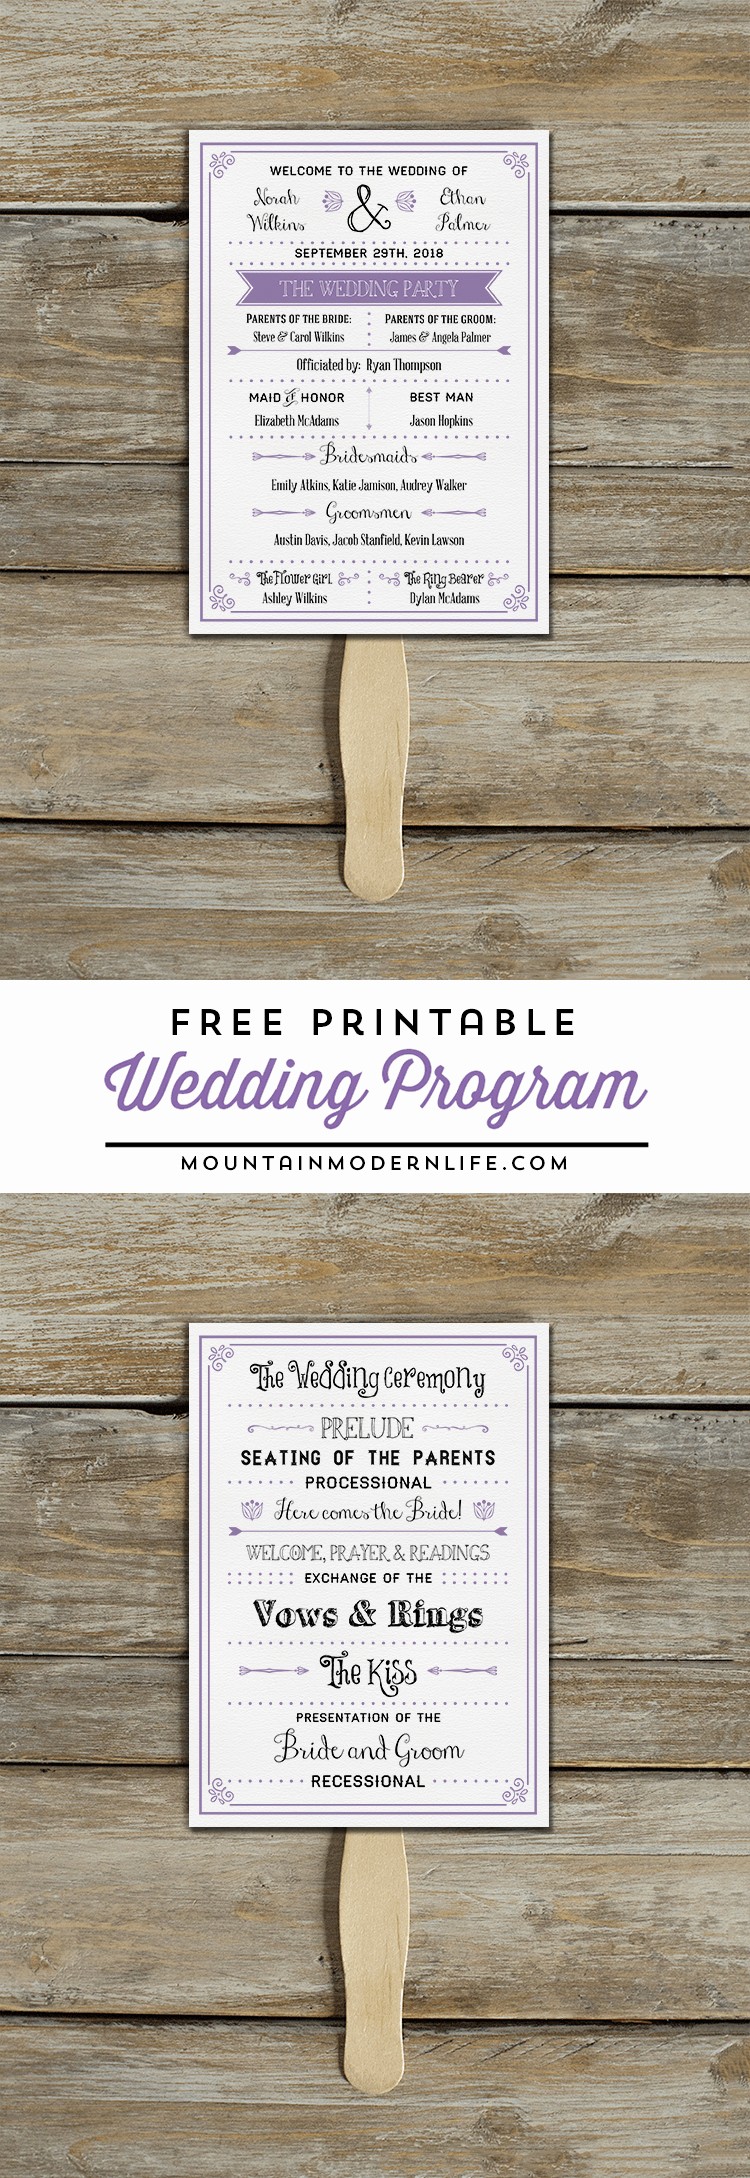 Free Downloadable Wedding Programs Templates Unique Free Printable Wedding Program